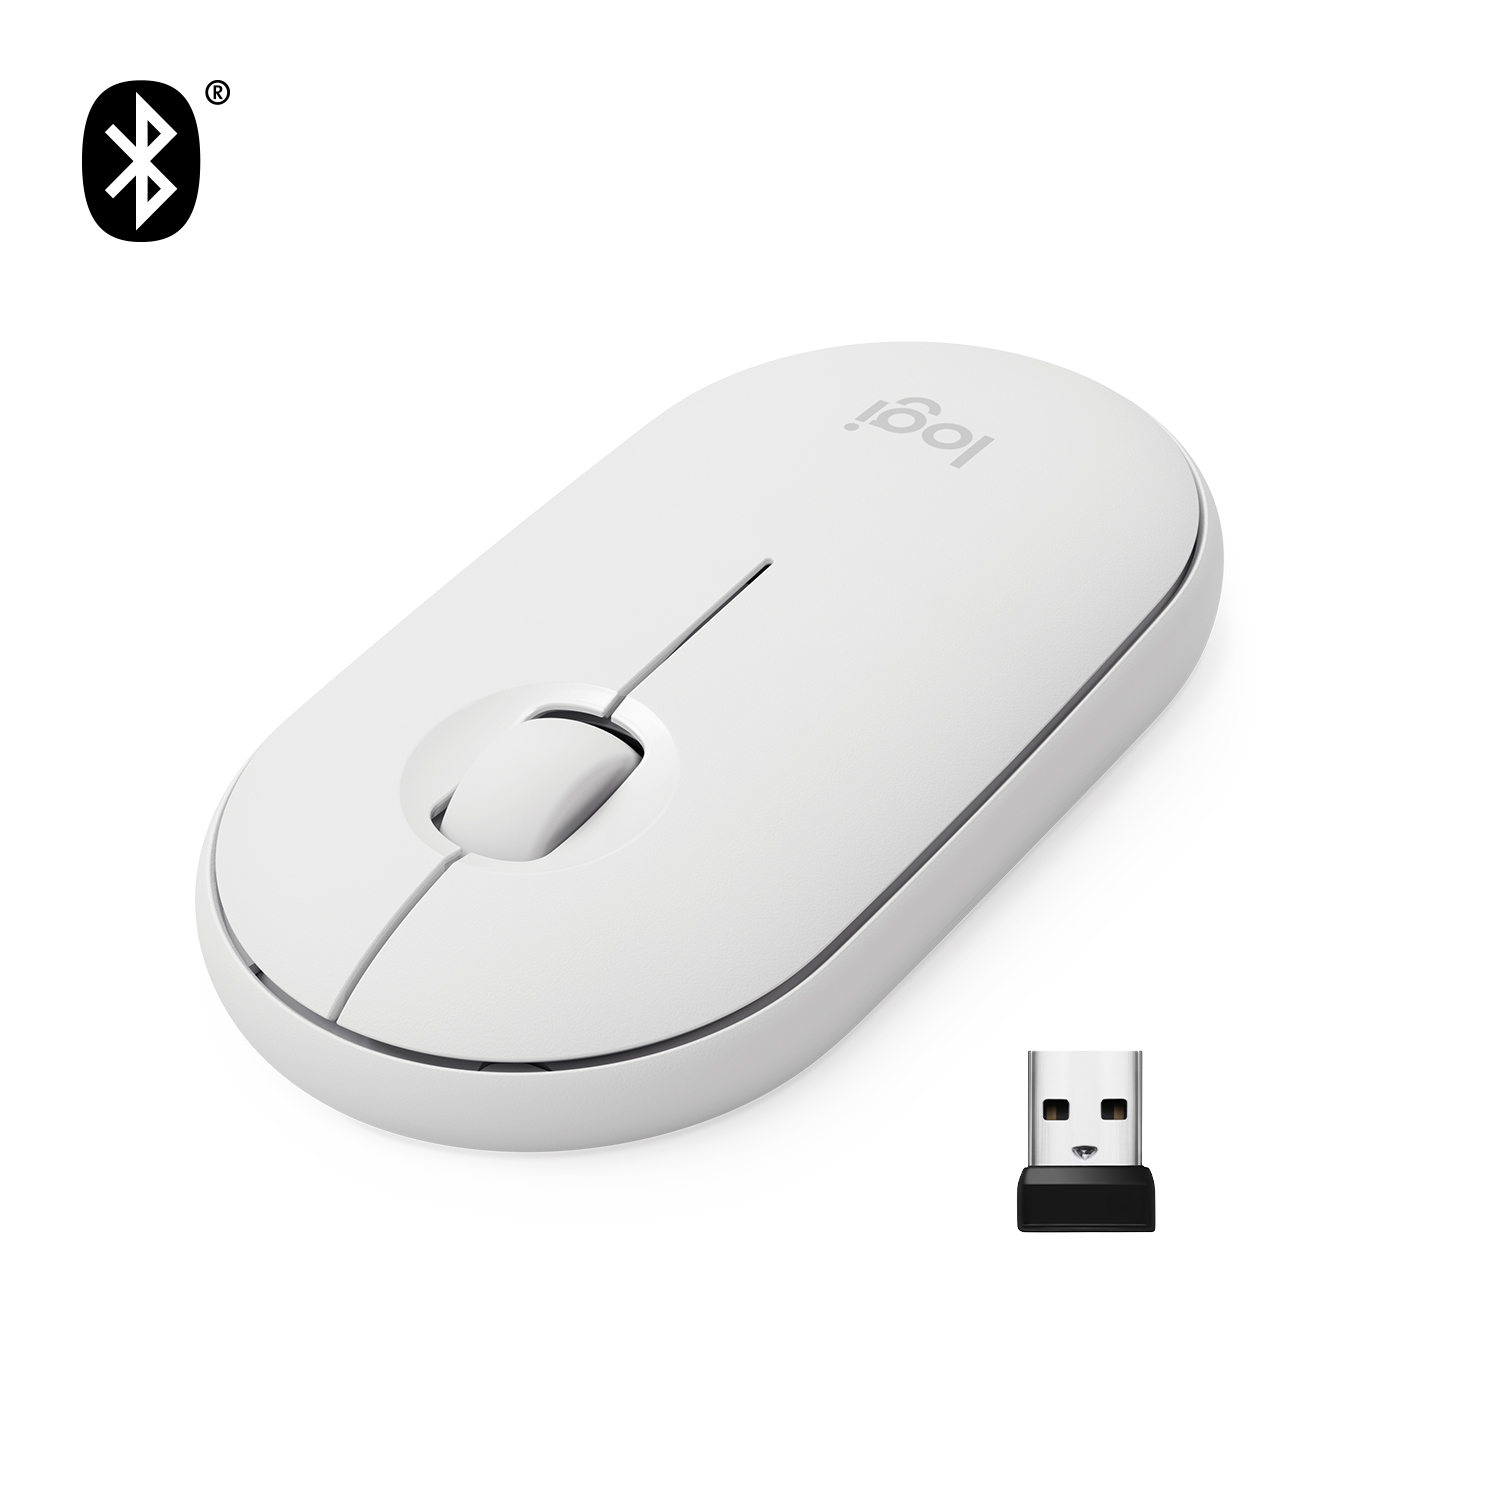 Pebble M350 Wireless Mouse - OFF-WHITE - EMEA